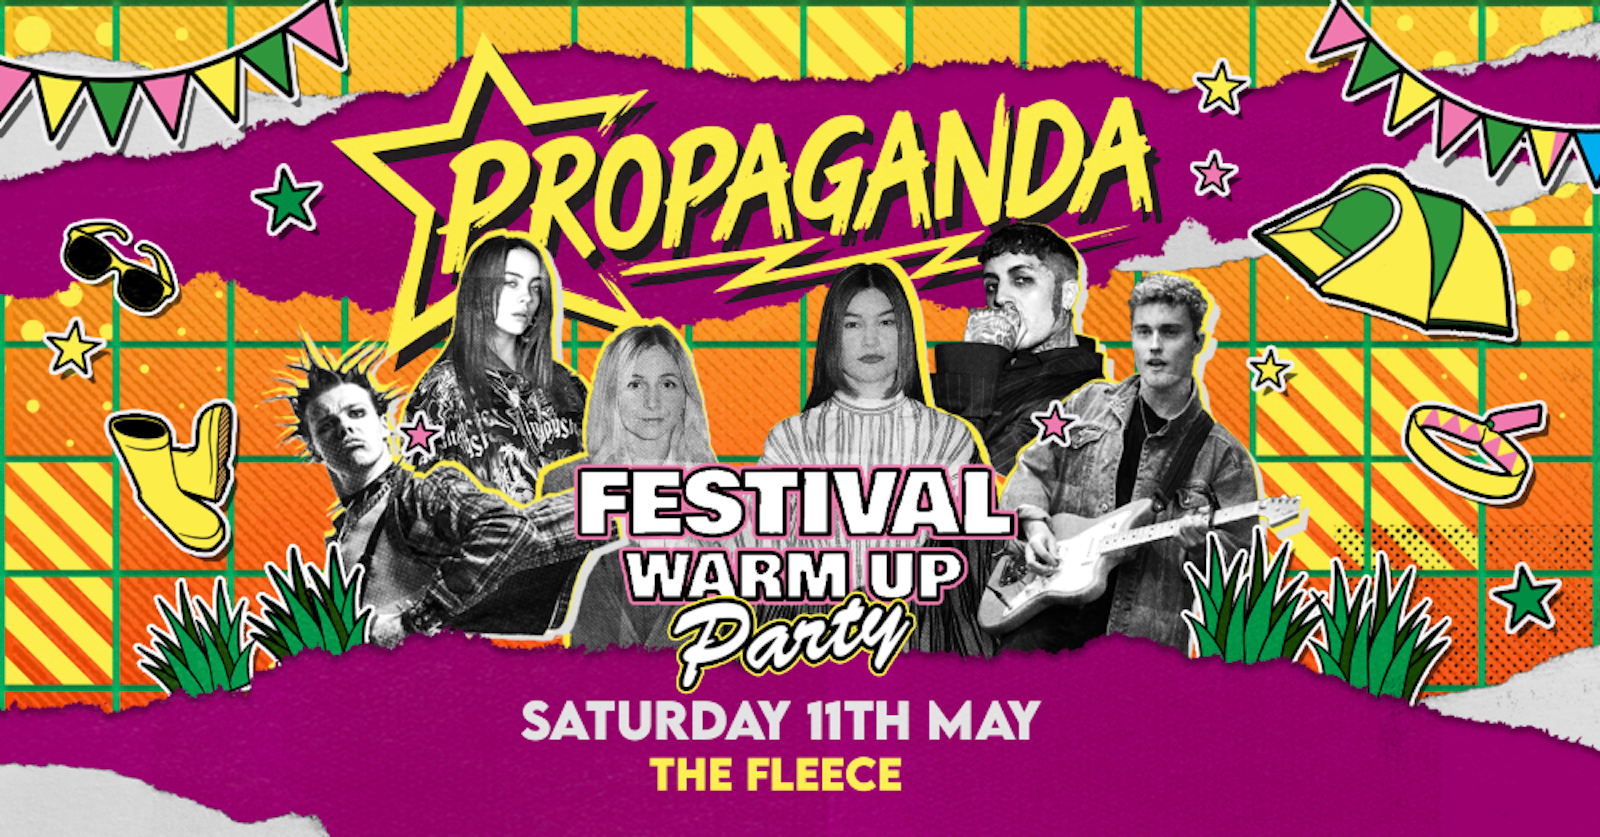 Propaganda Bristol – Festival Warm-Up Party!